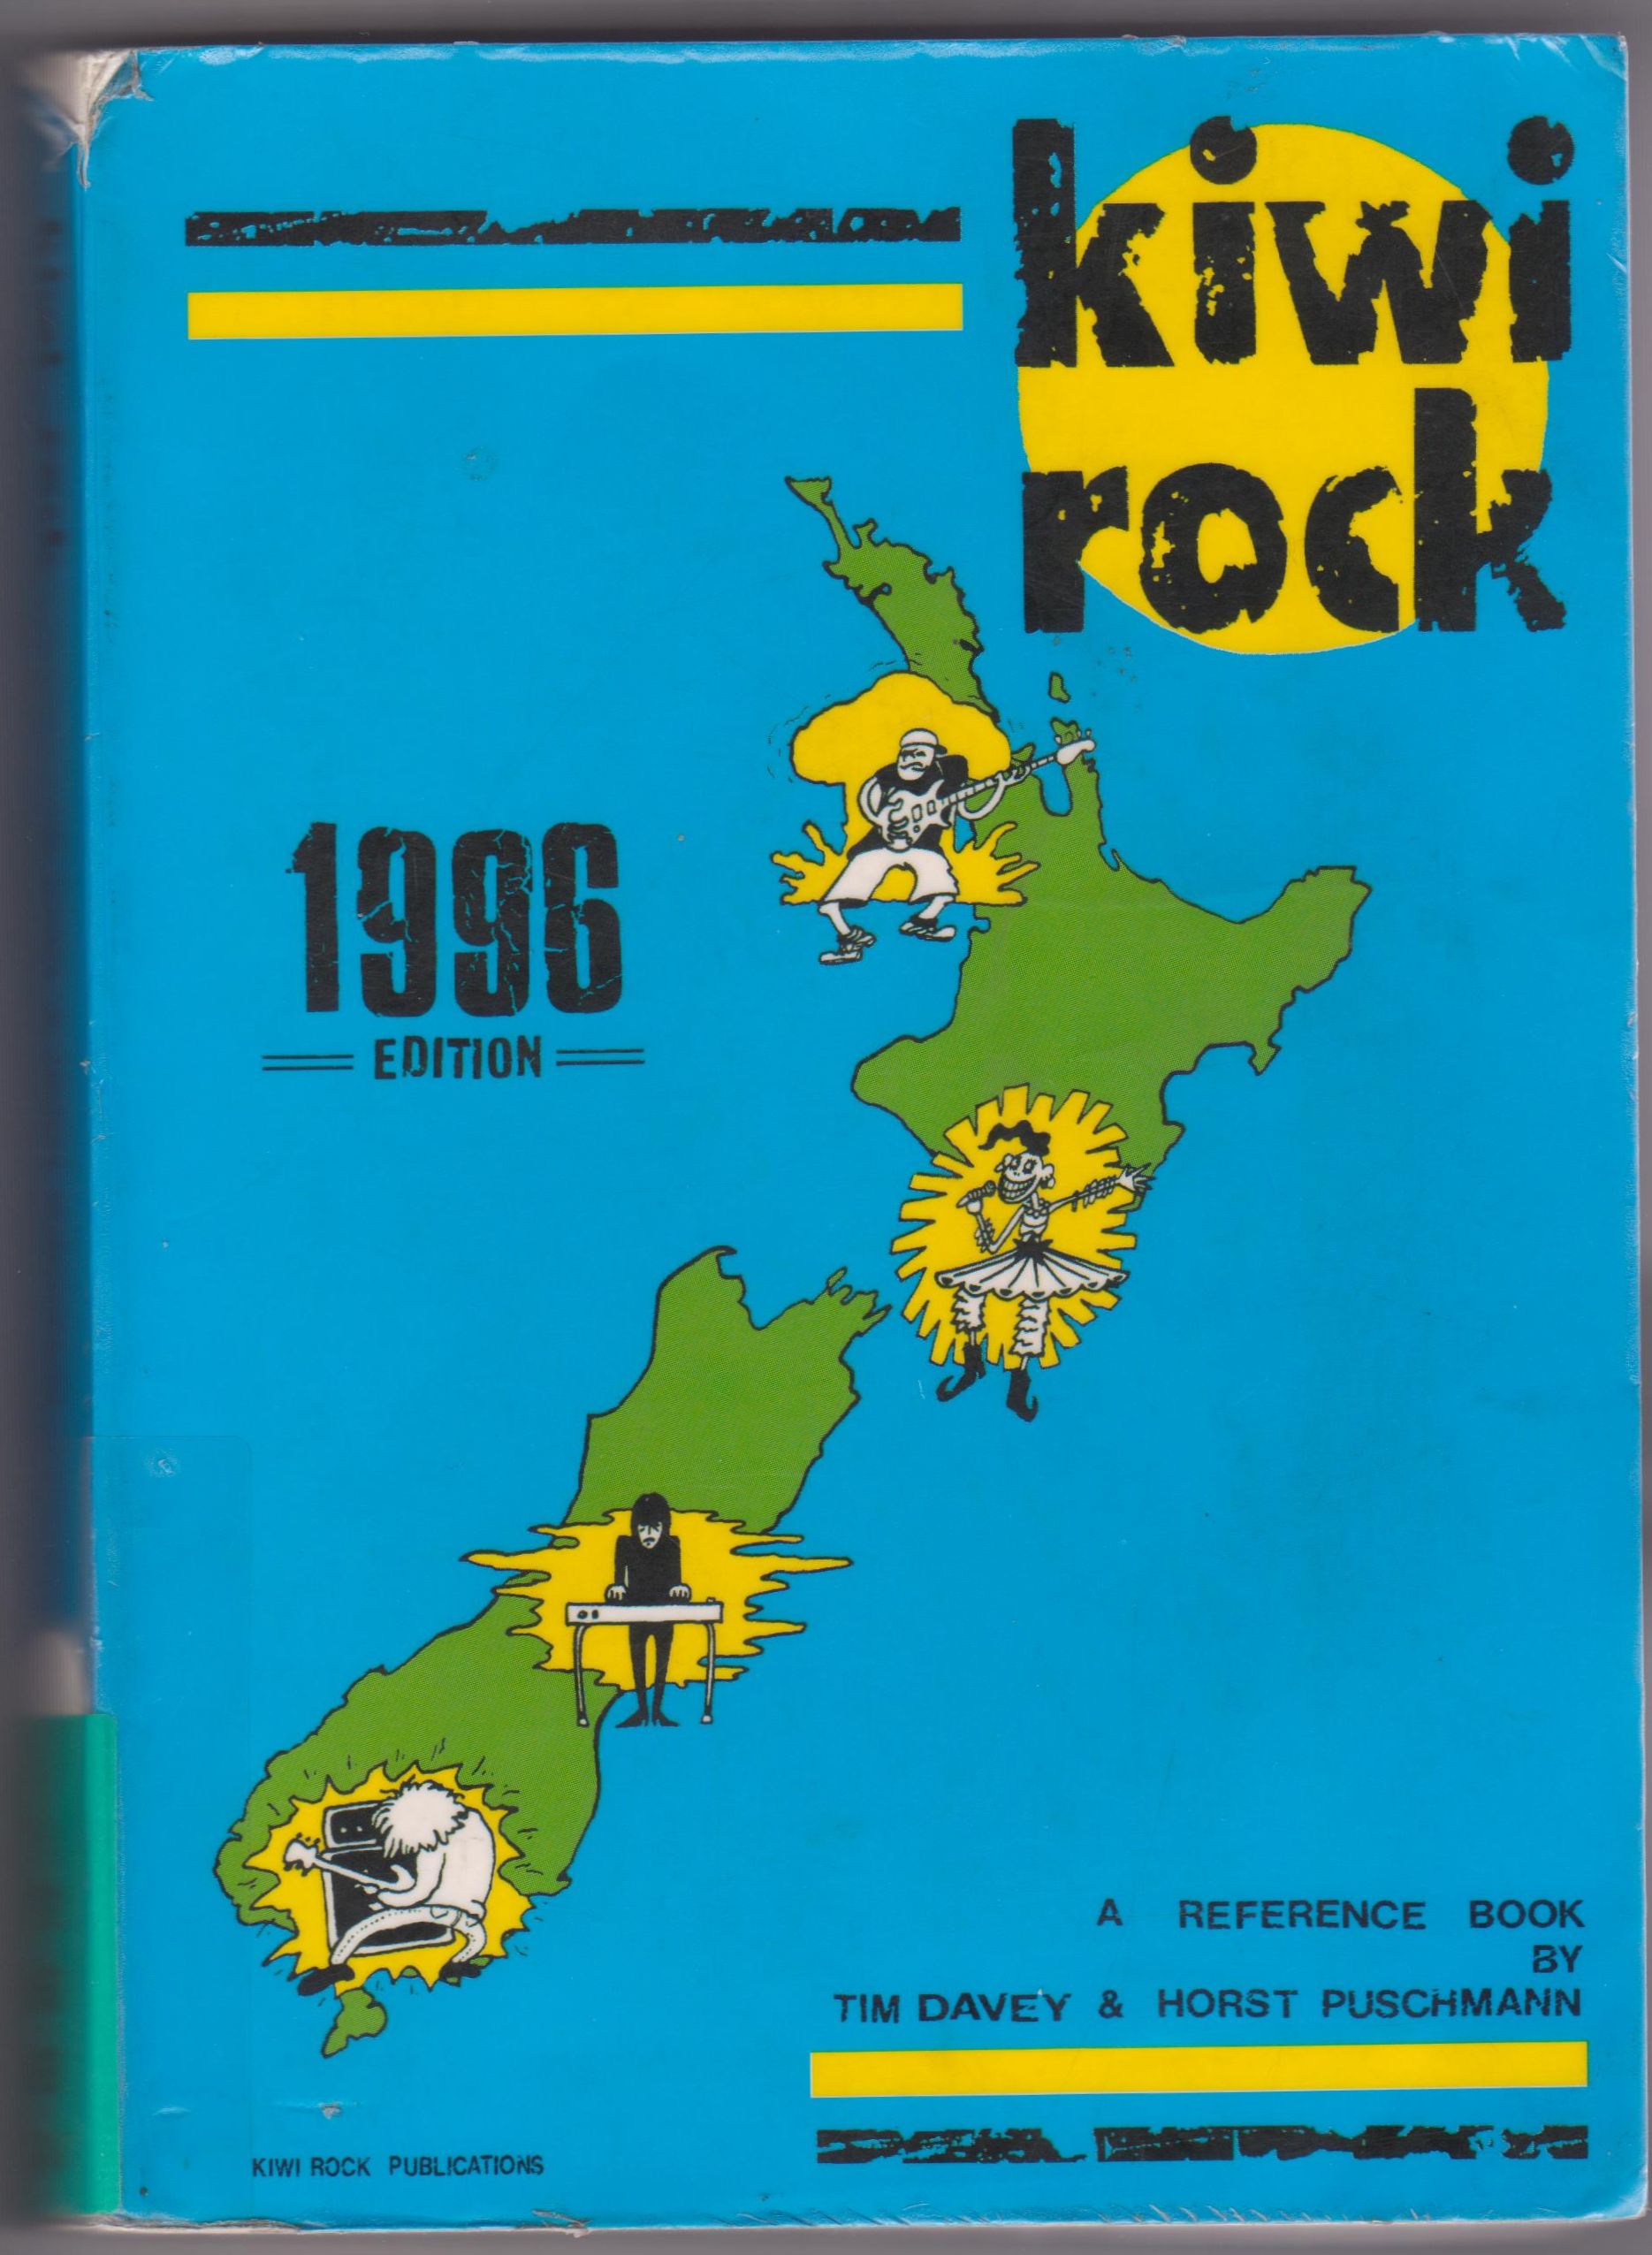 Kiwi Rock